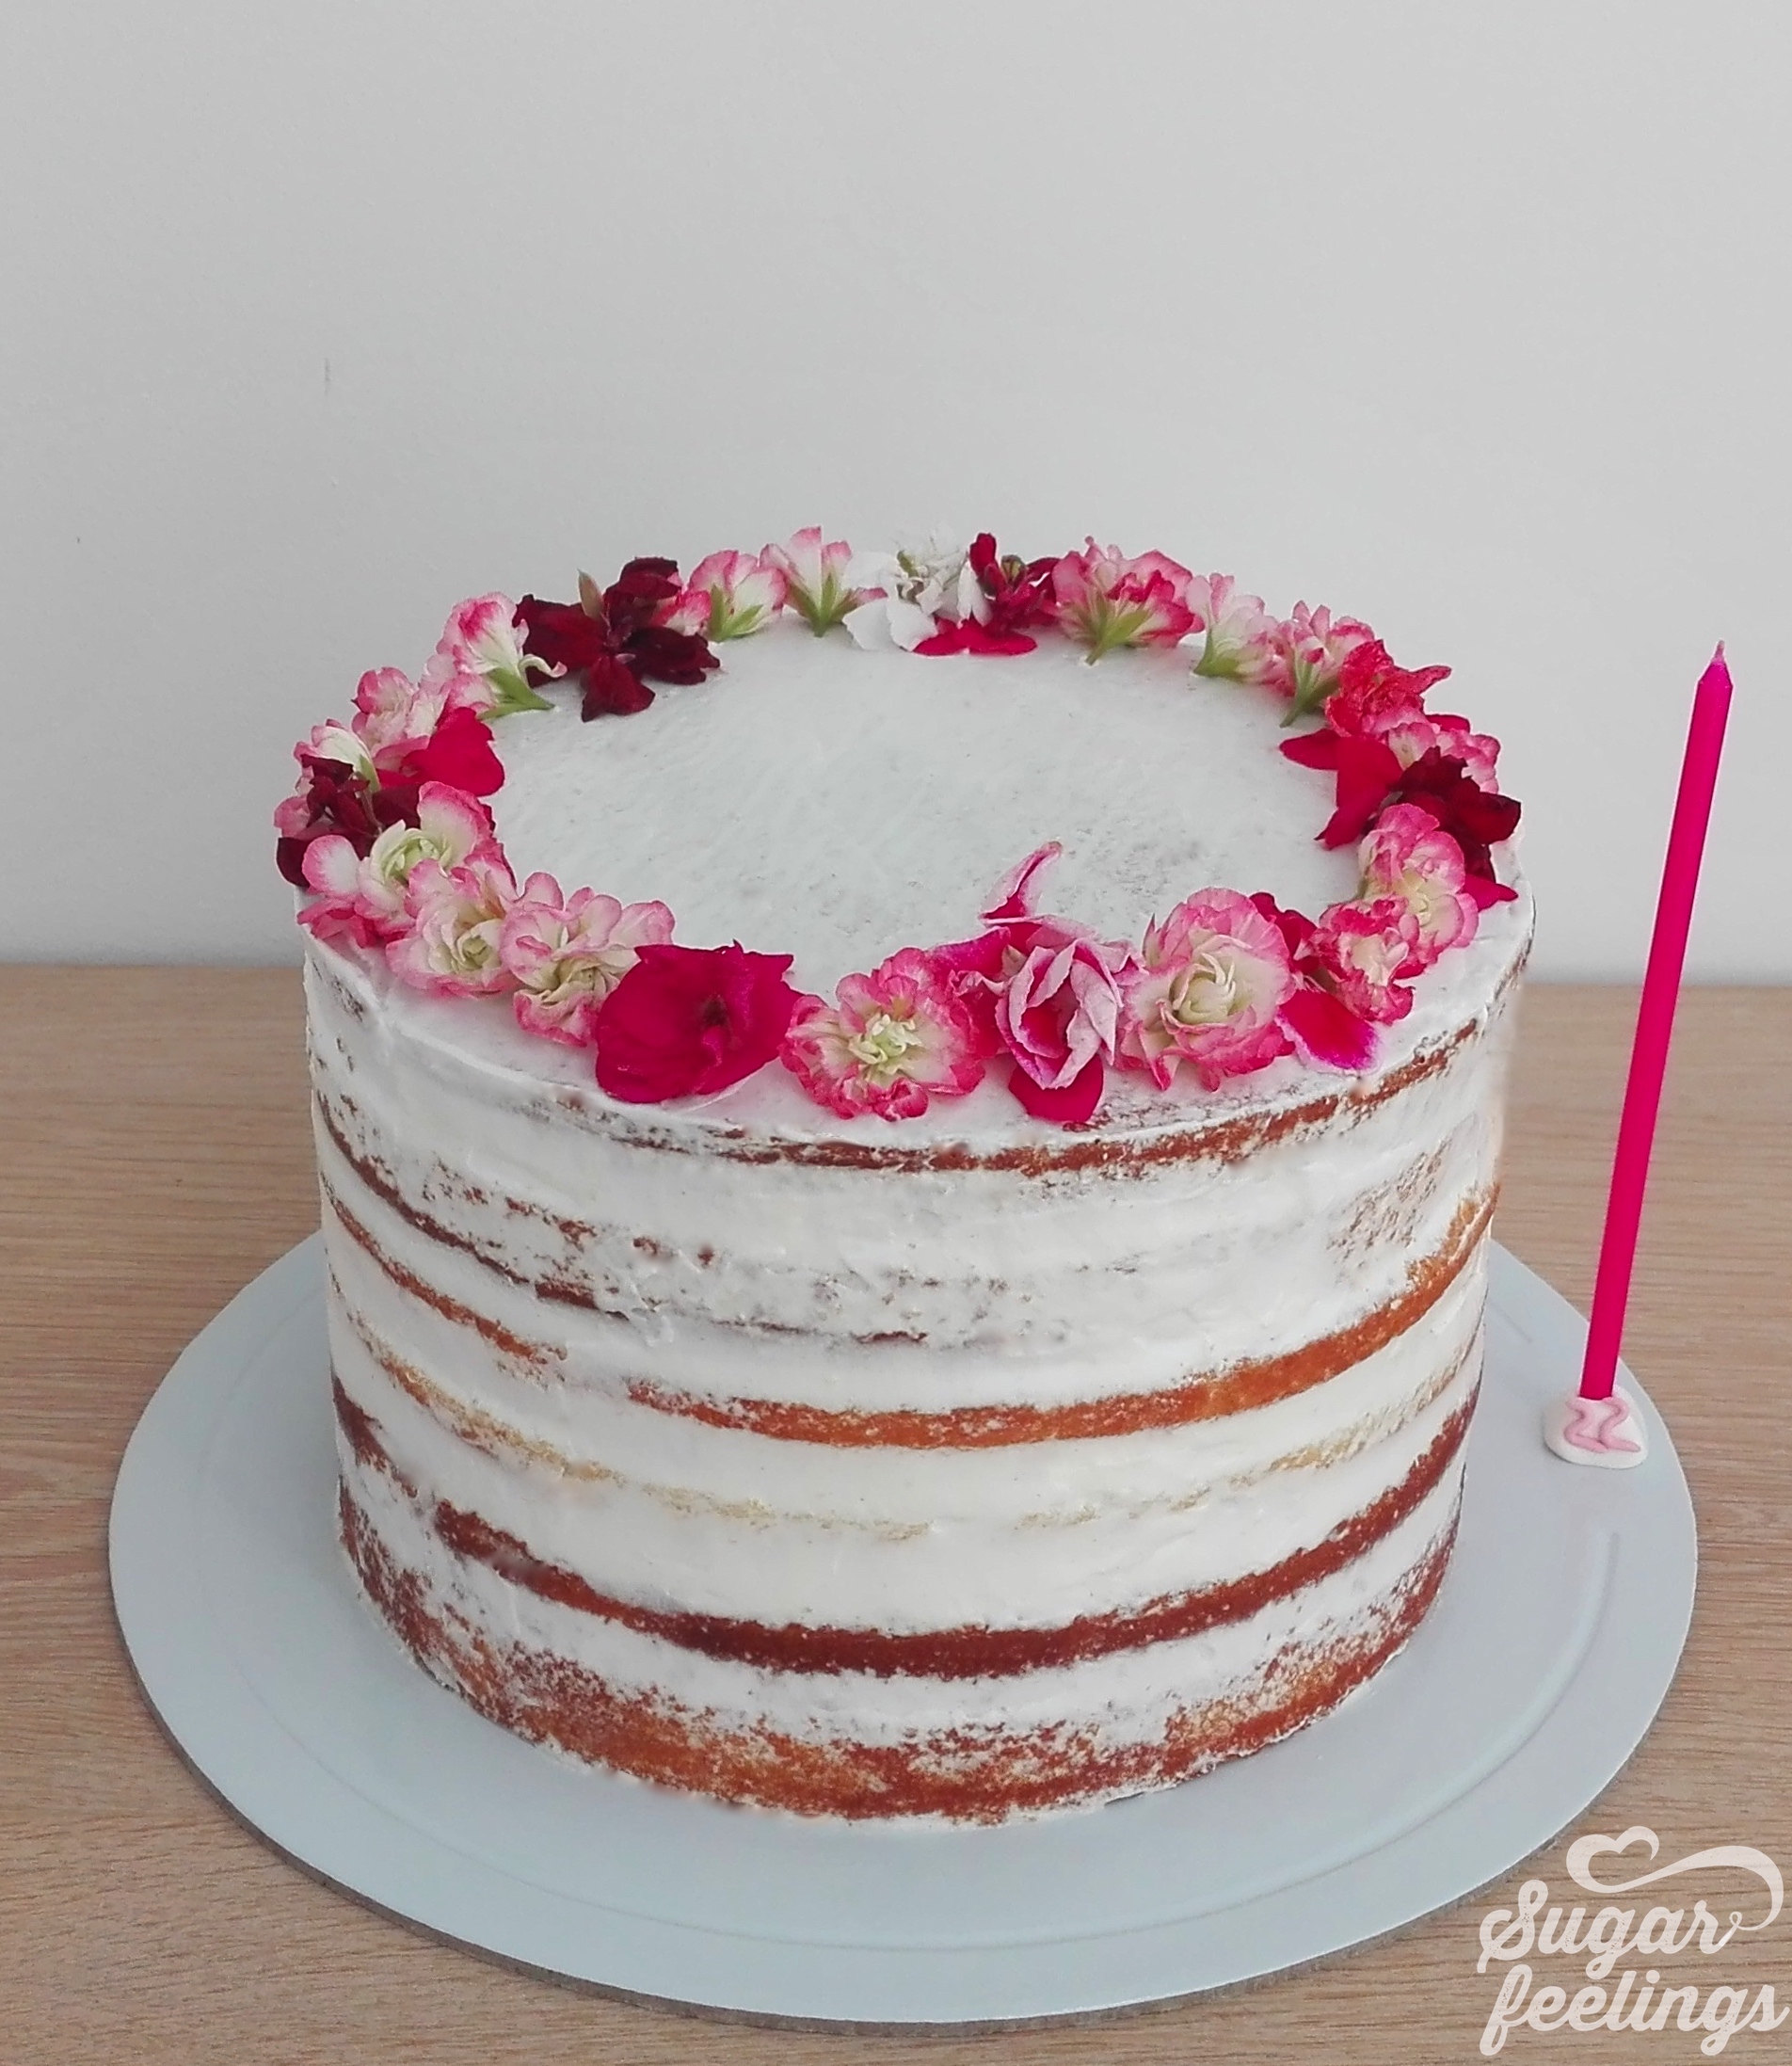 Naked Cake & Edible flowers